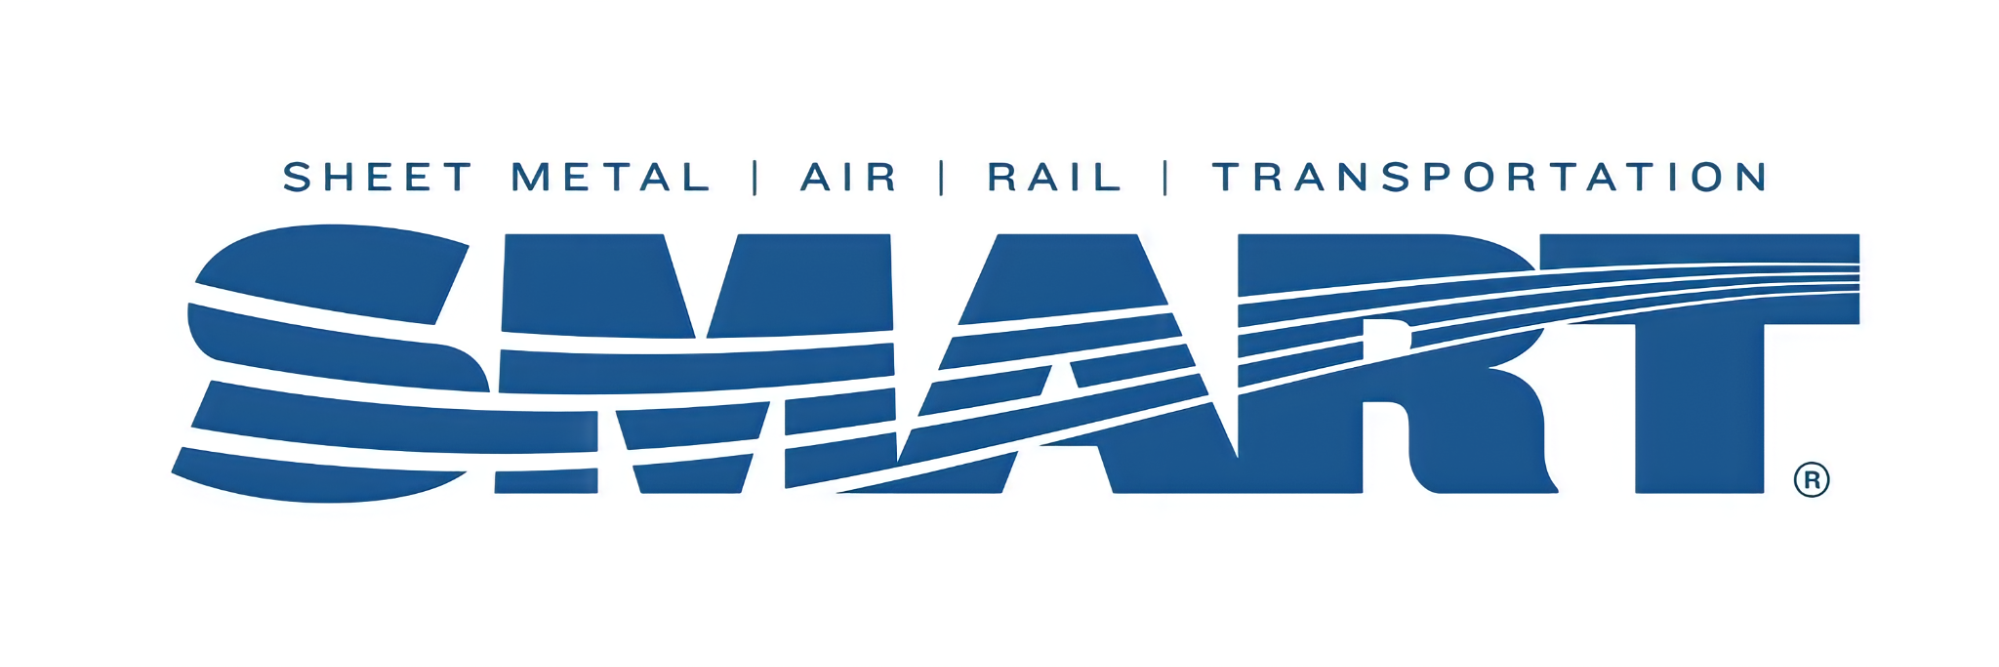 SMART: Sheet Metal | Air | Rail | Transportation